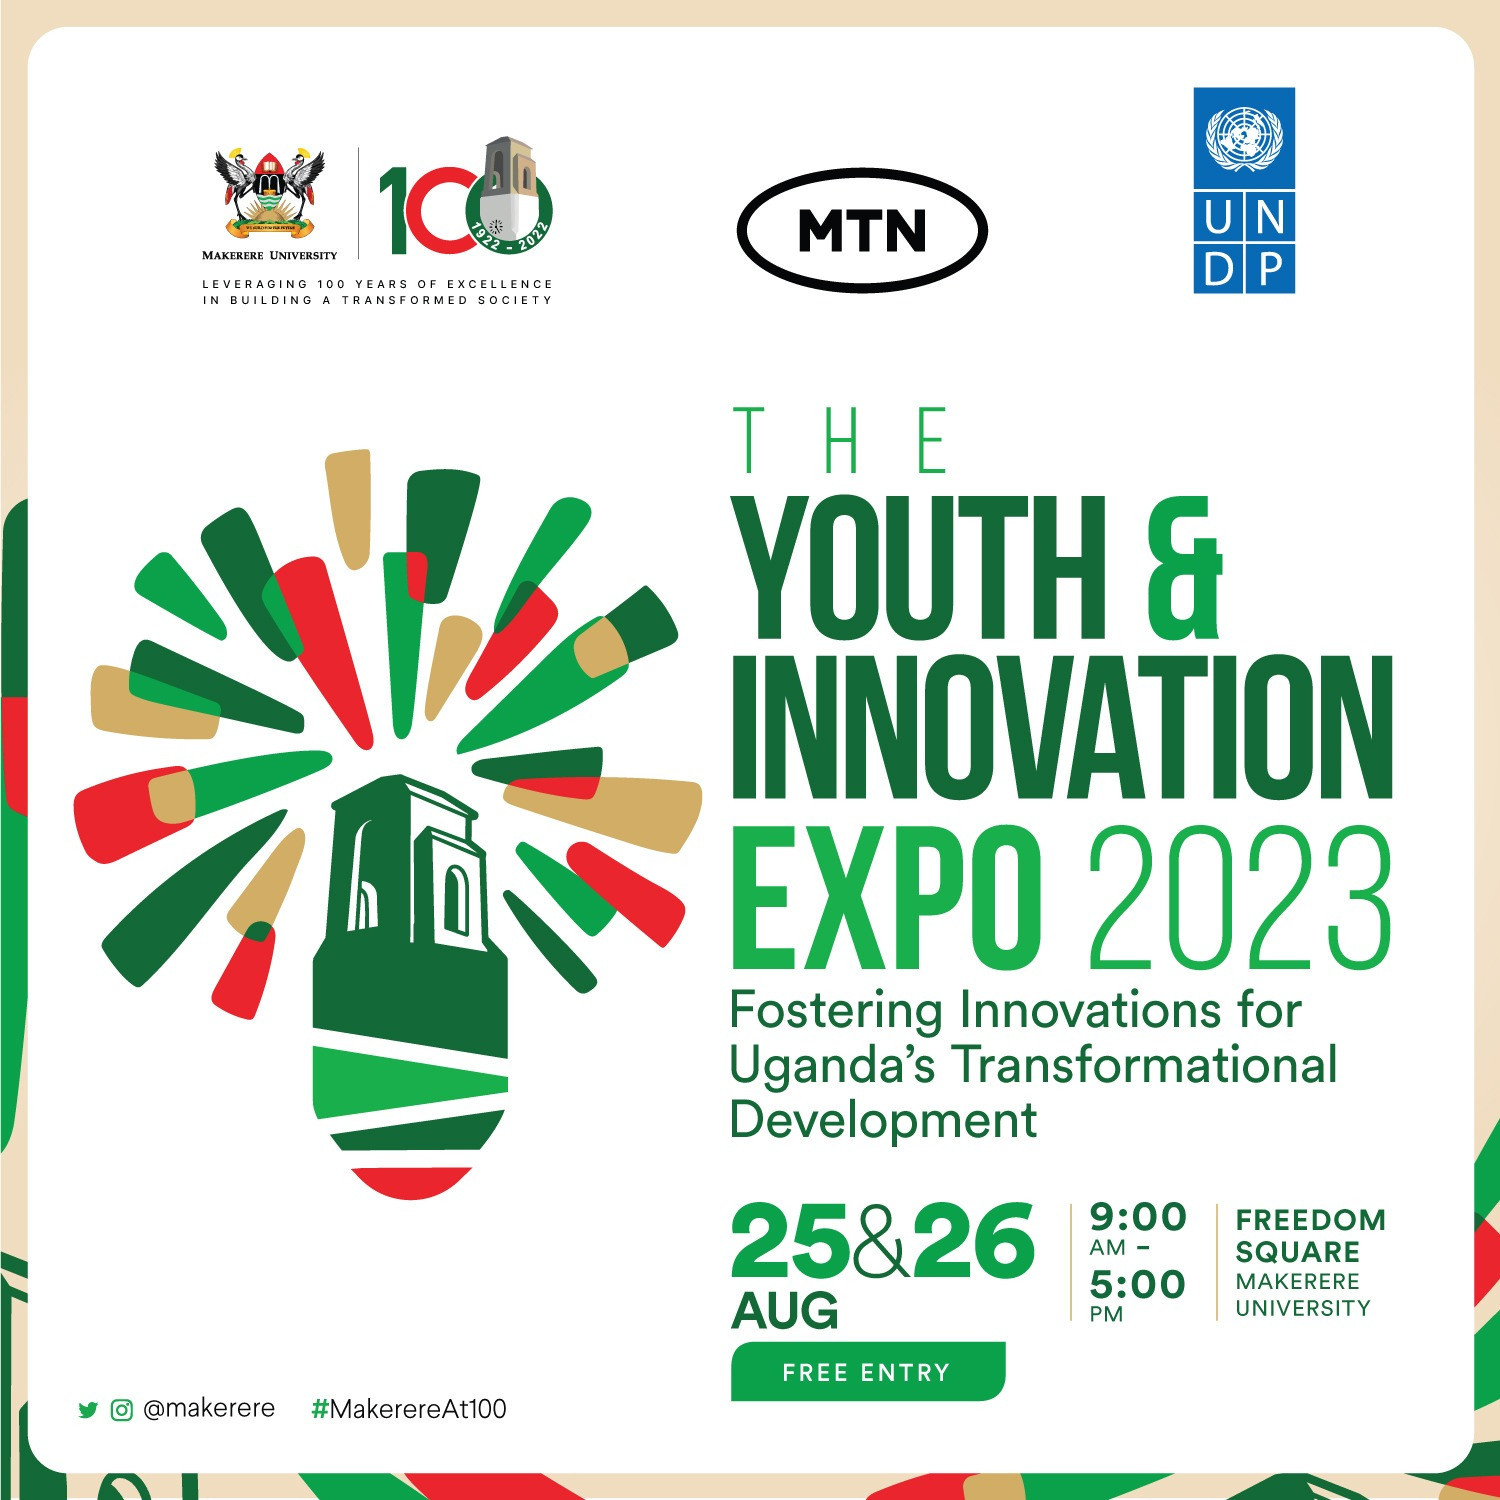 Youth & Innovation Expo 2023 - Makerere University. Freedom Square